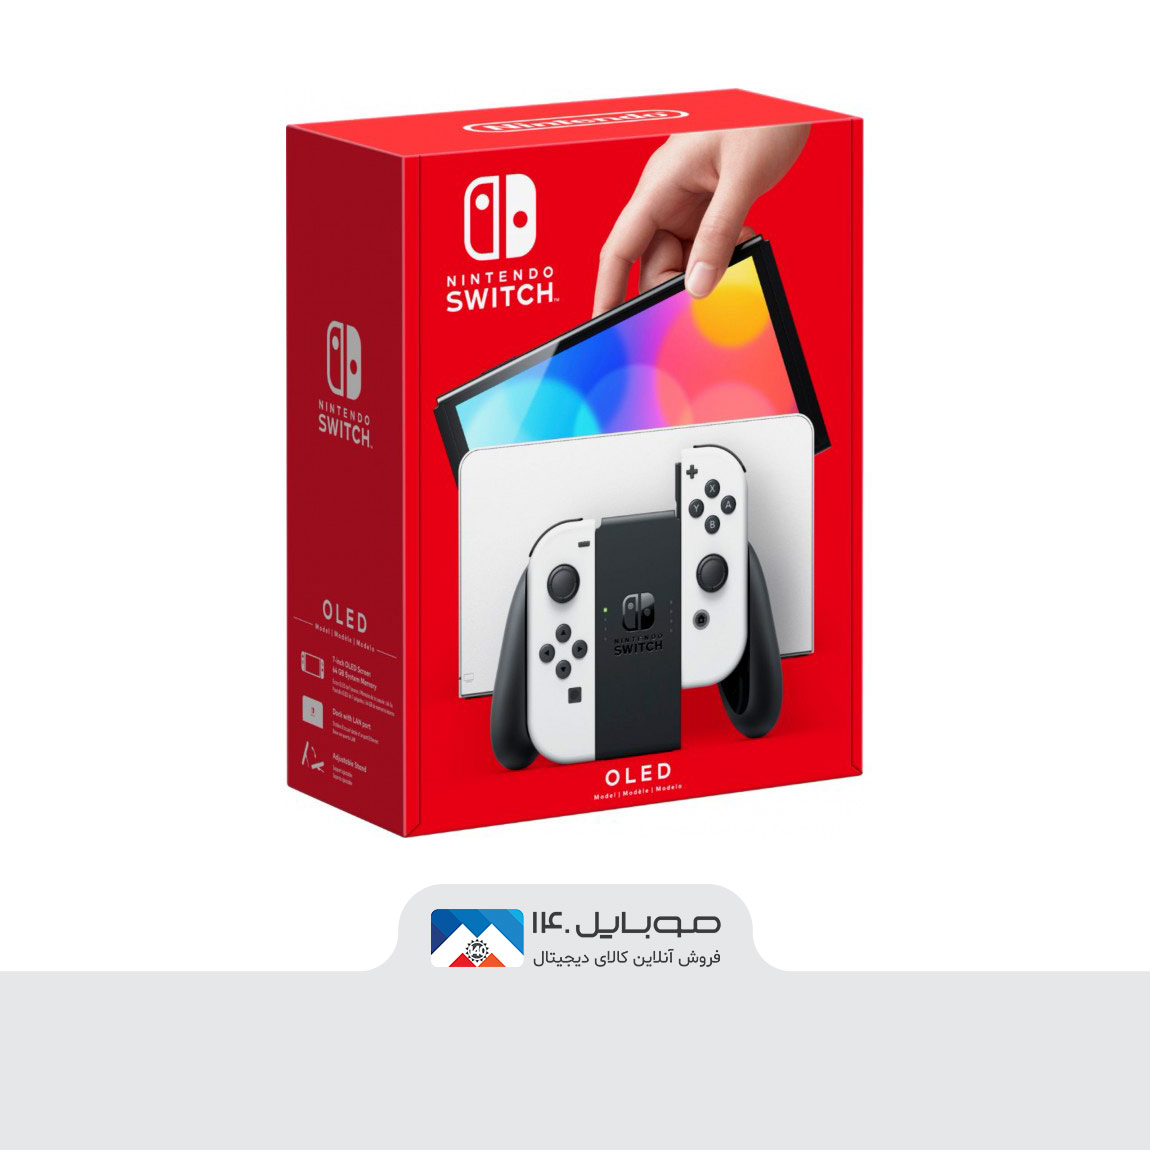  Nintendo Switch OLED White Joy-Con Game Console 5